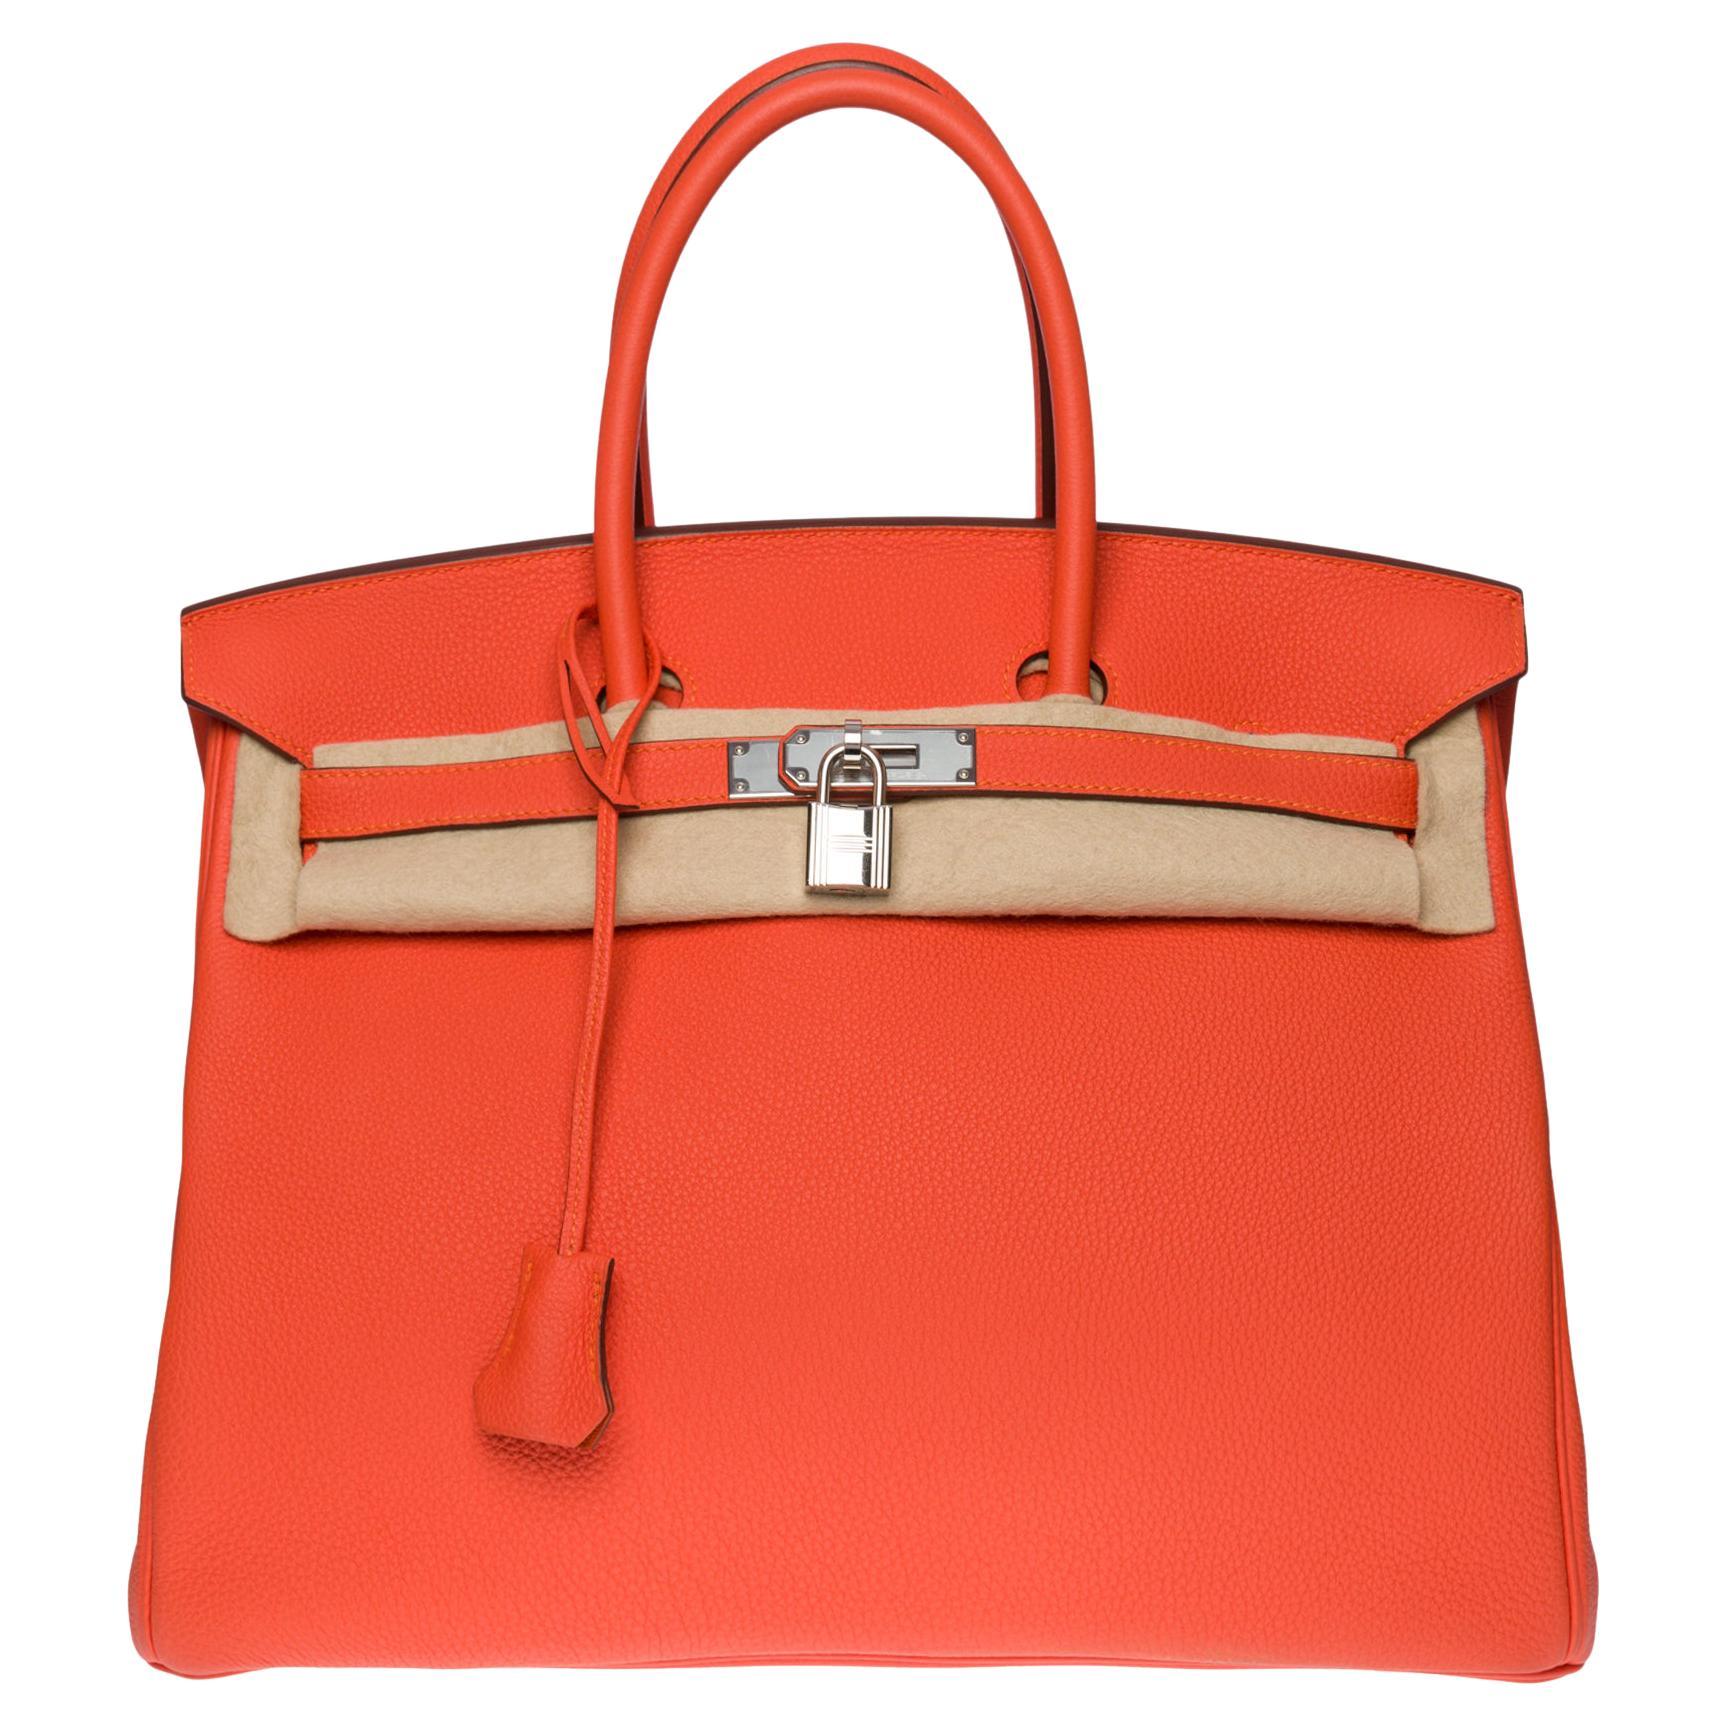 Almost New Hermès Birkin 35 handbag in Orange Hermès Togo leather, SHW !